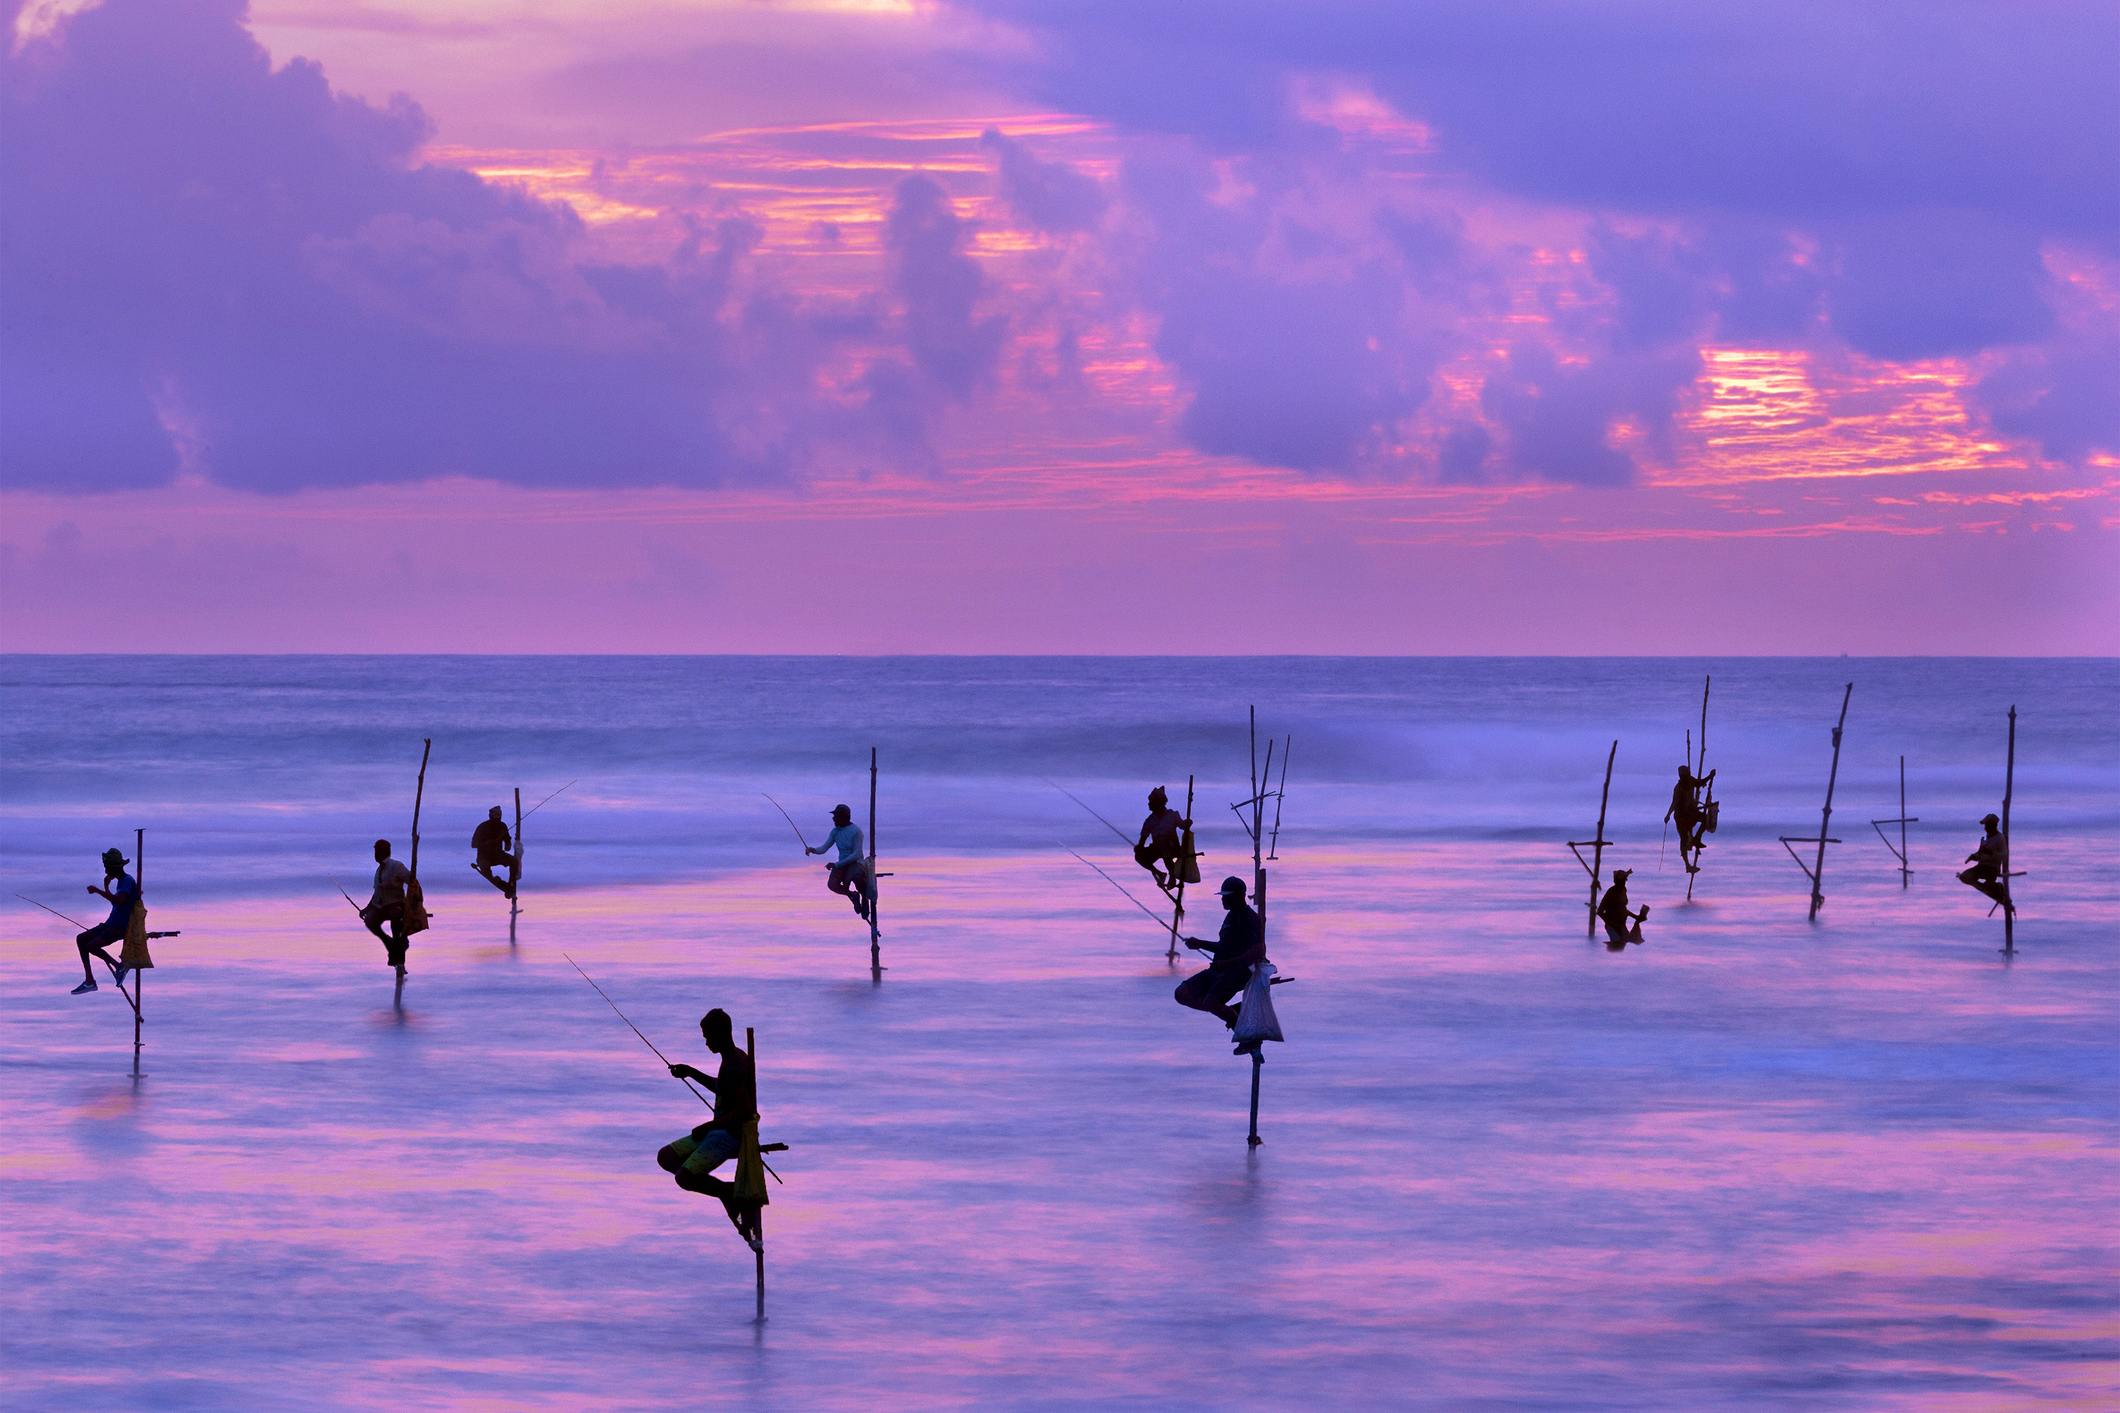 Fishermen on stilts at the sunset, Sri Lanka